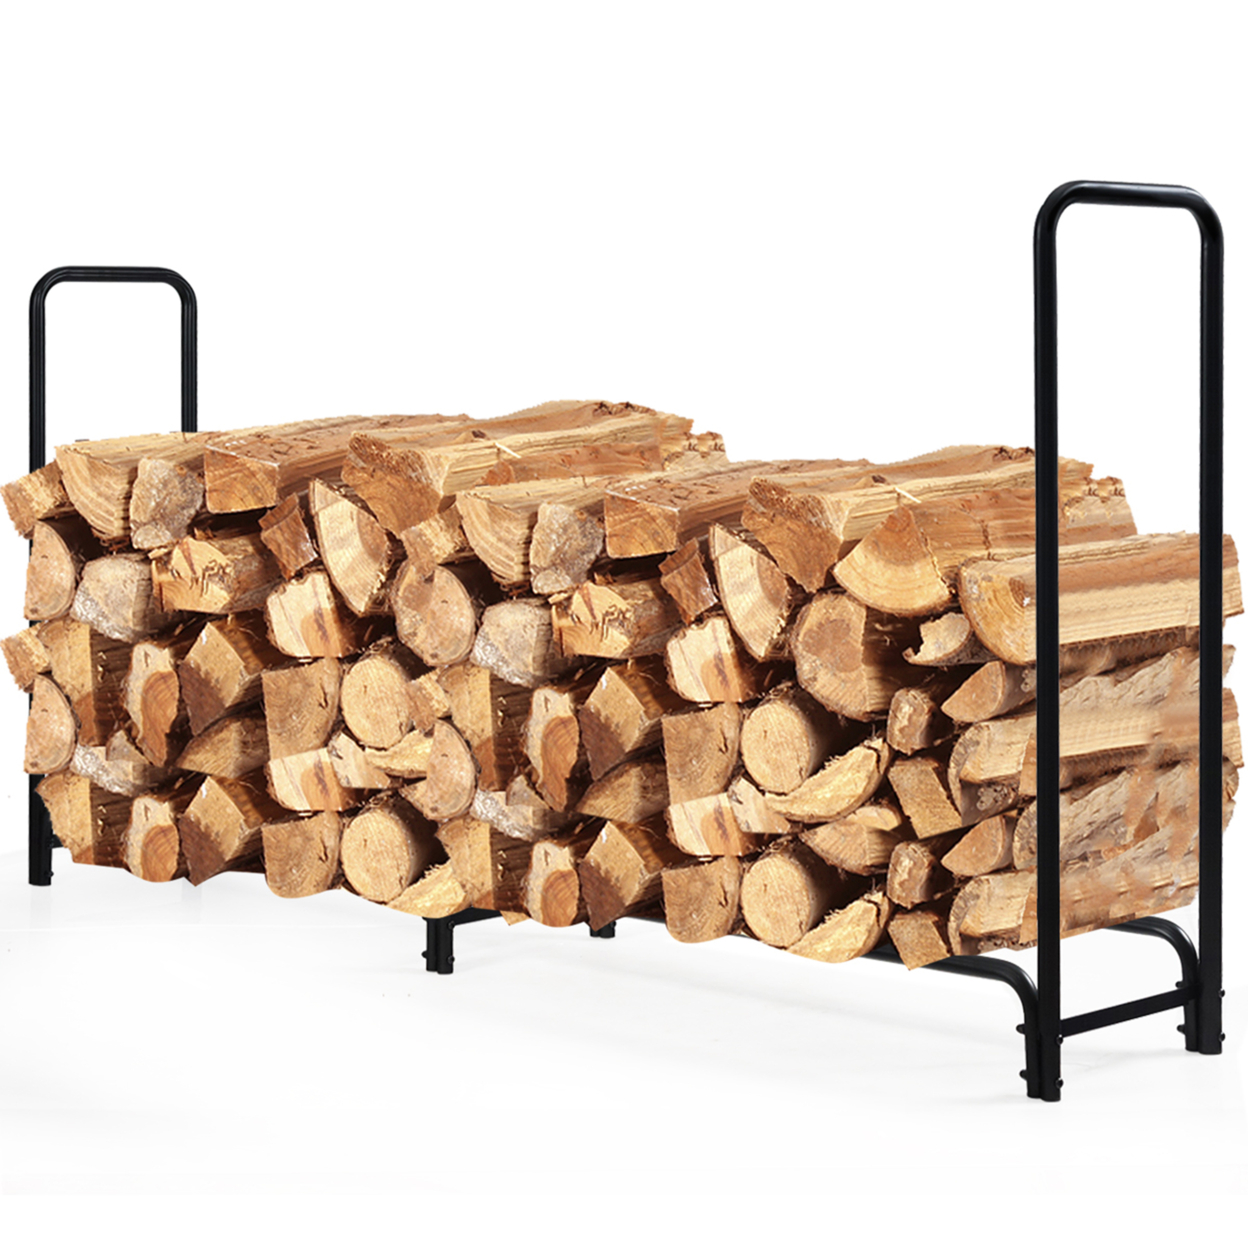 8 Feet Outdoor Steel Firewood Log Rack Wood Storage Holder For Fireplace Black